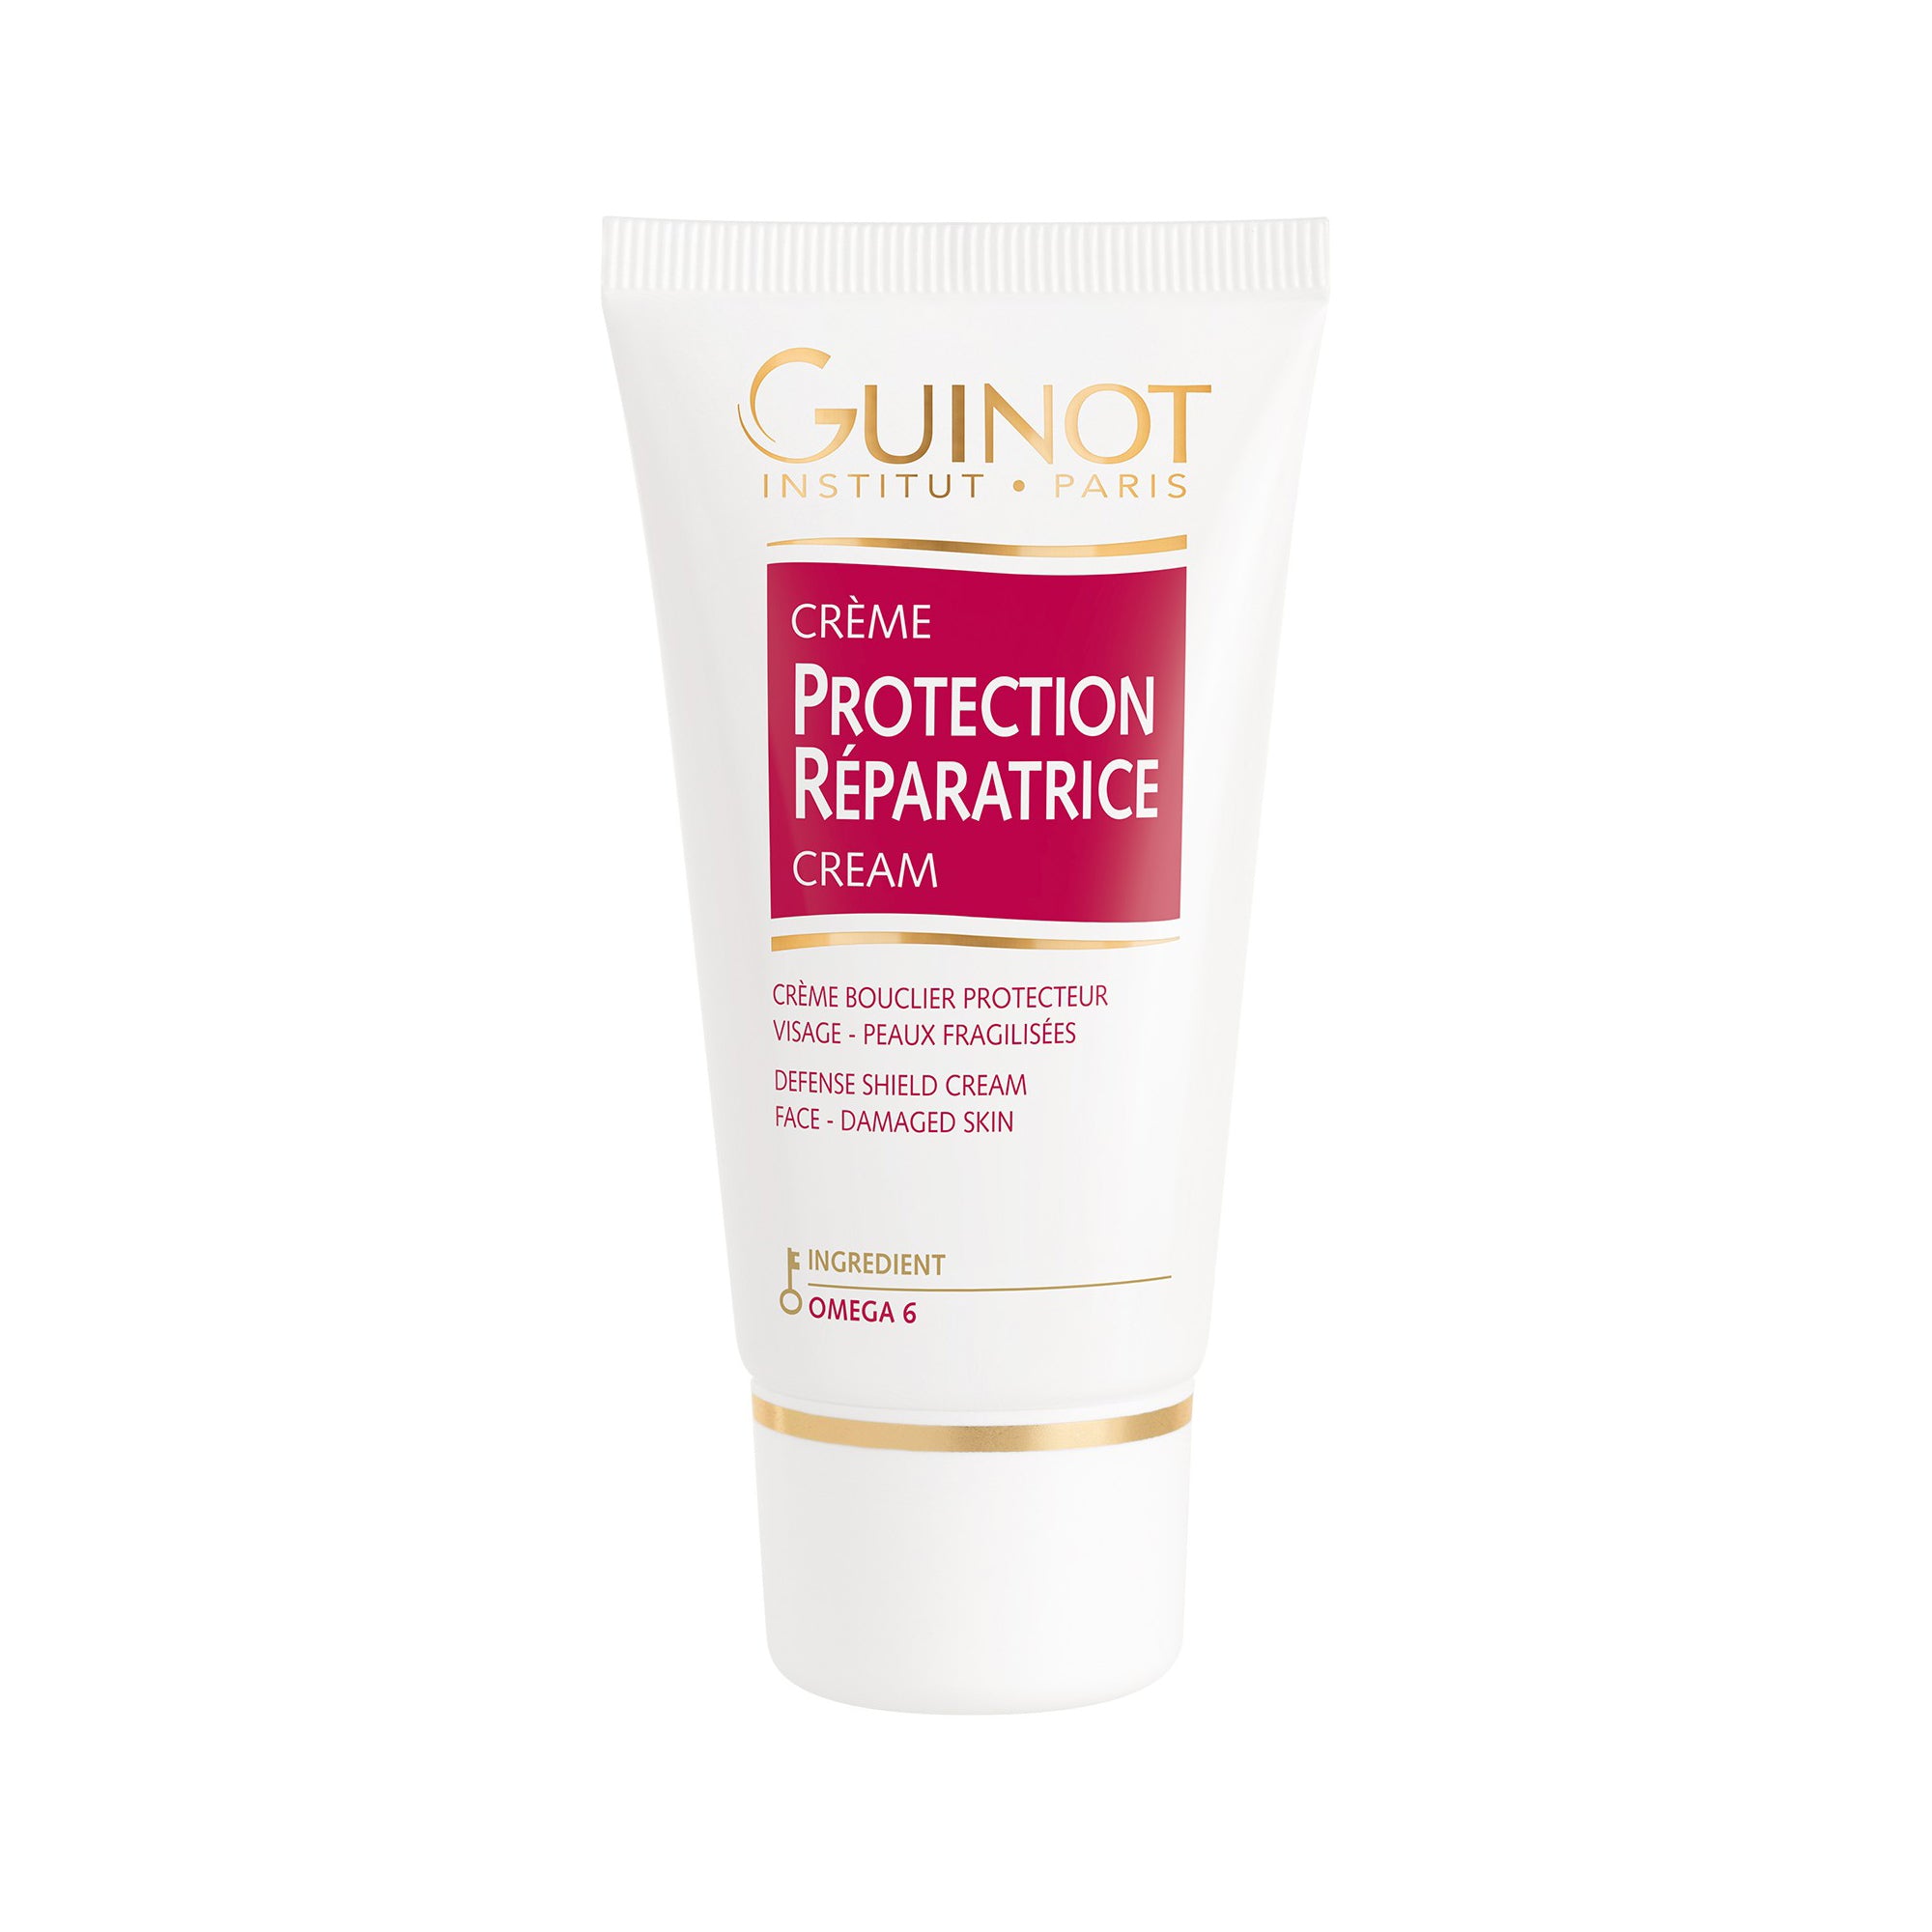 Crème Protection Reparatrice (Cream) - Guinot